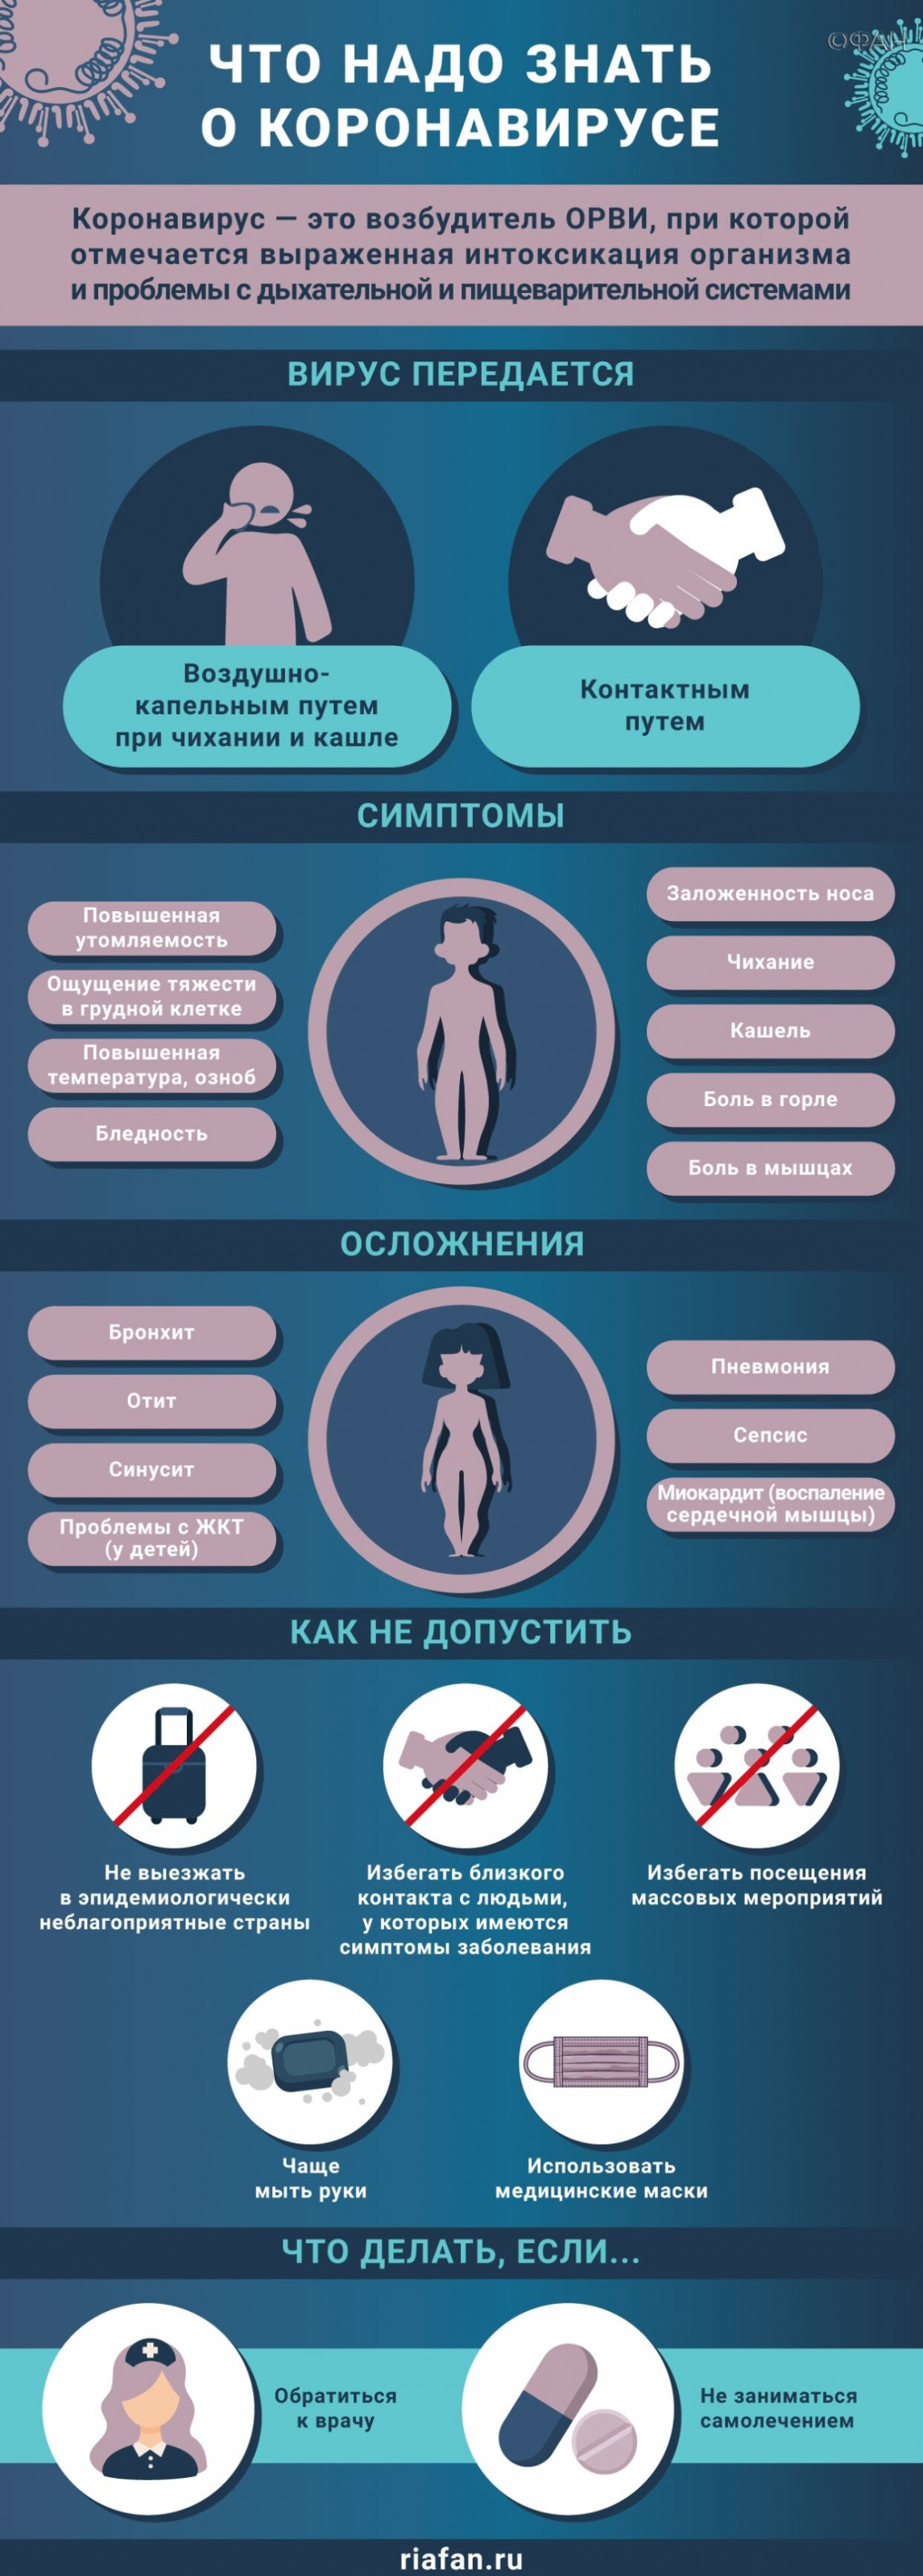 Медики за сутки провели почти 14 тысяч тестов на COVID-19 в Петербурге